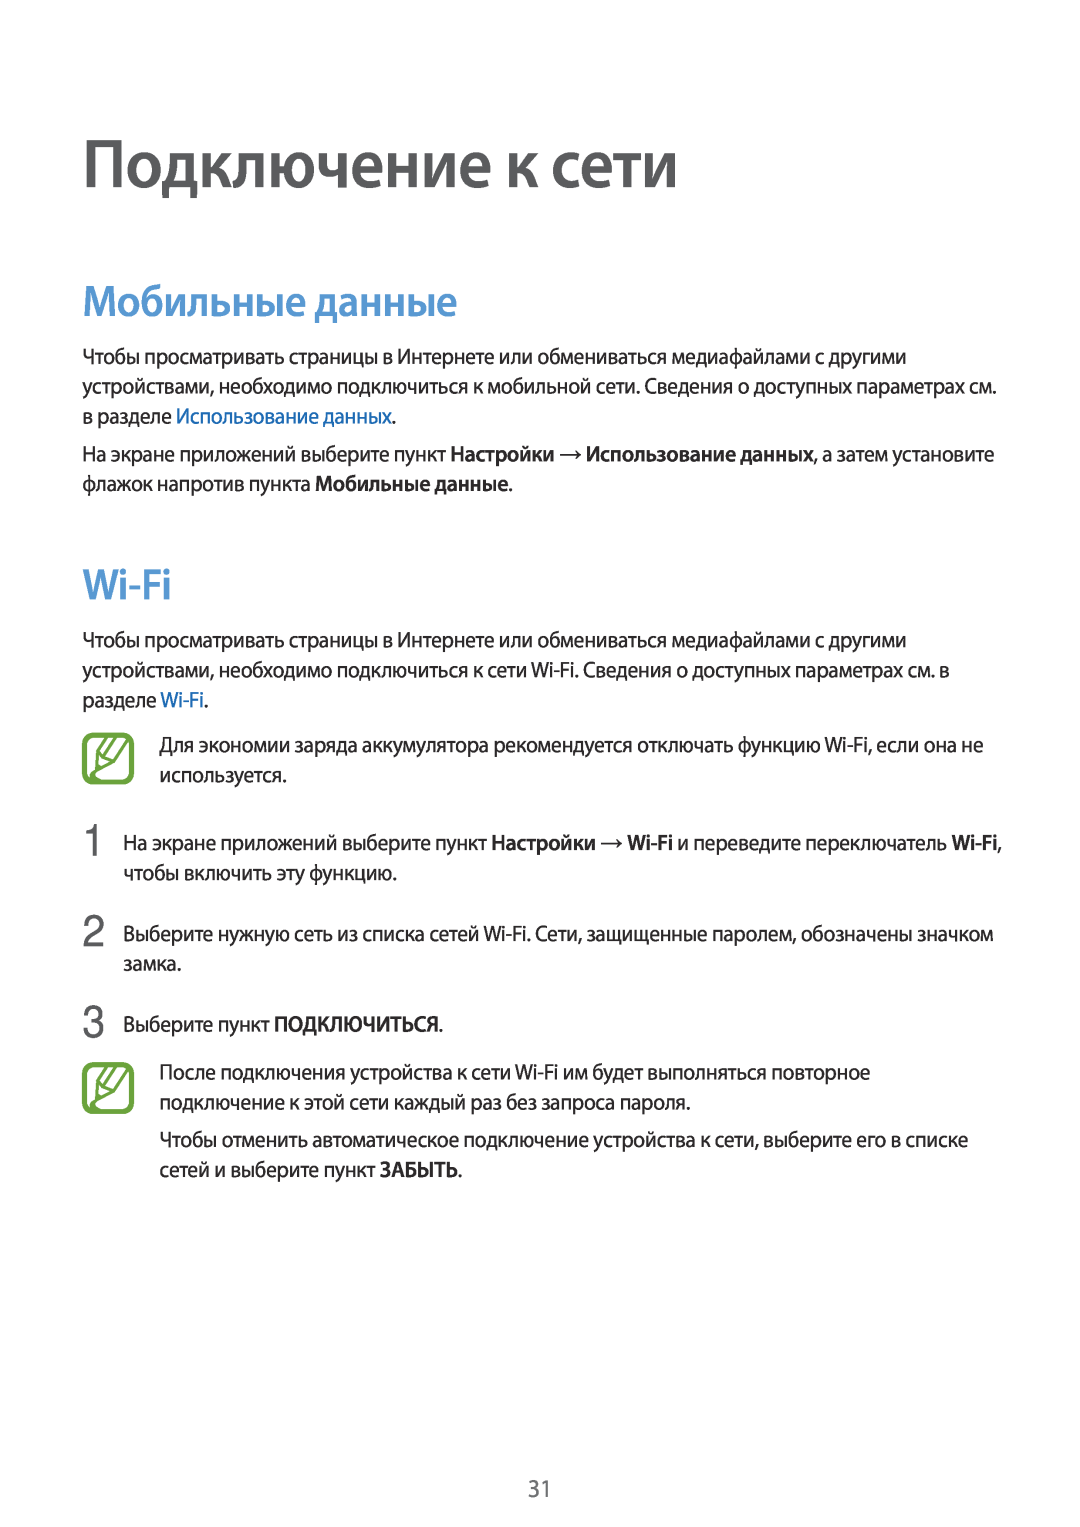 Samsung SM-G531FZAASEB, SM-G531FZWASEB, SM-G531FZDASEB, SM-G531FZAASER manual Подключение к сети, Мобильные данные, Wi-Fi 